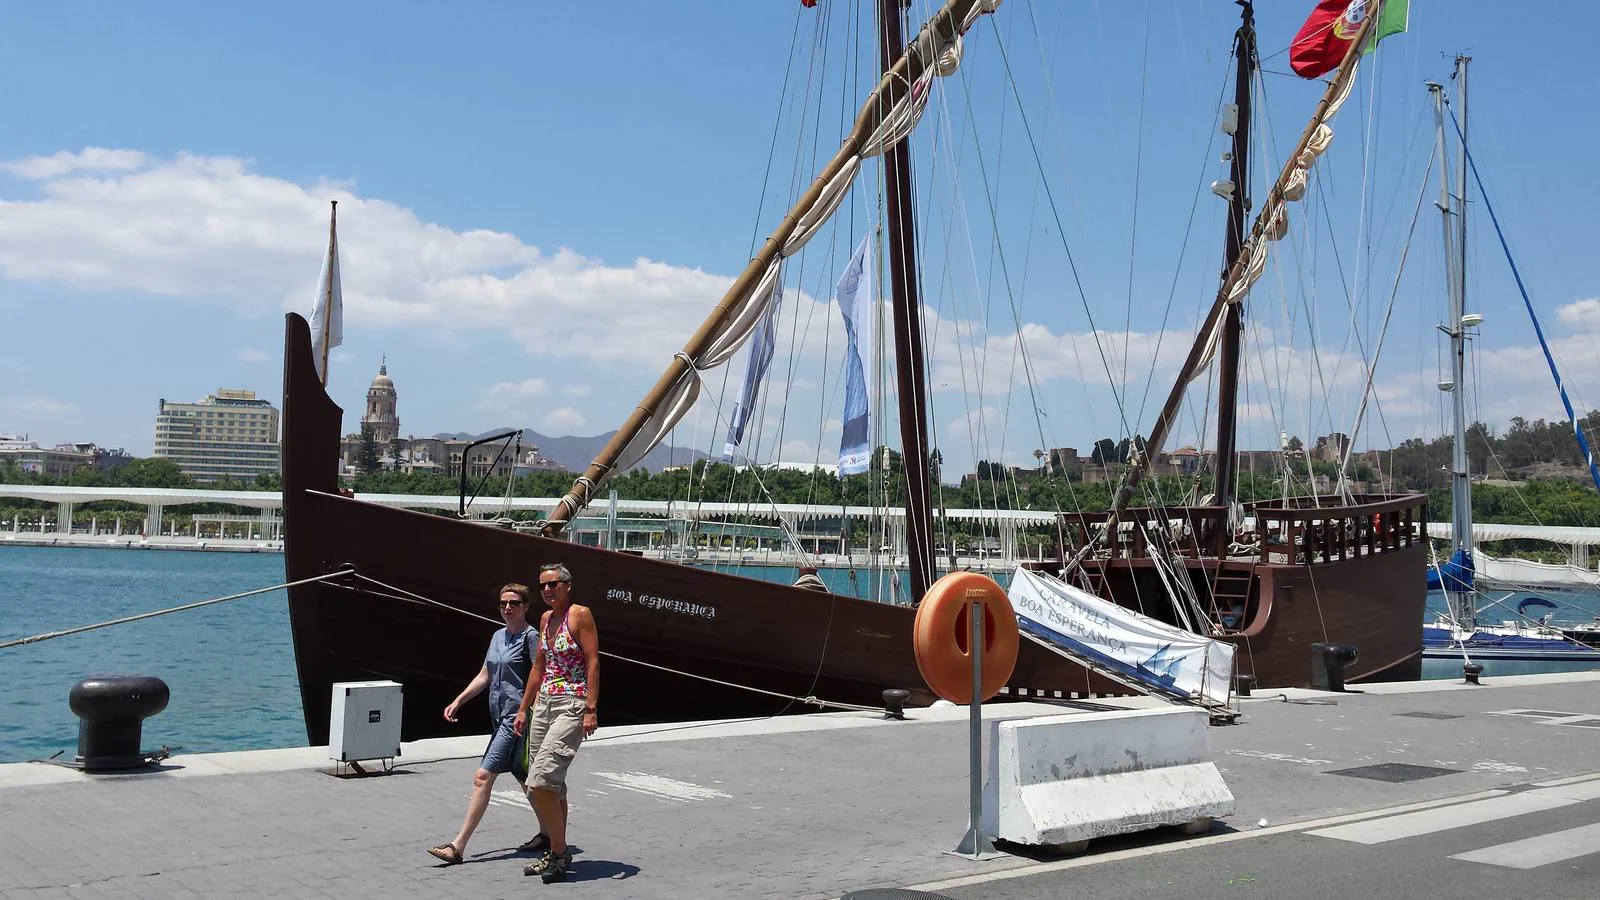 Llega al puerto de Málaga la carabela 'Boa Esperanza'